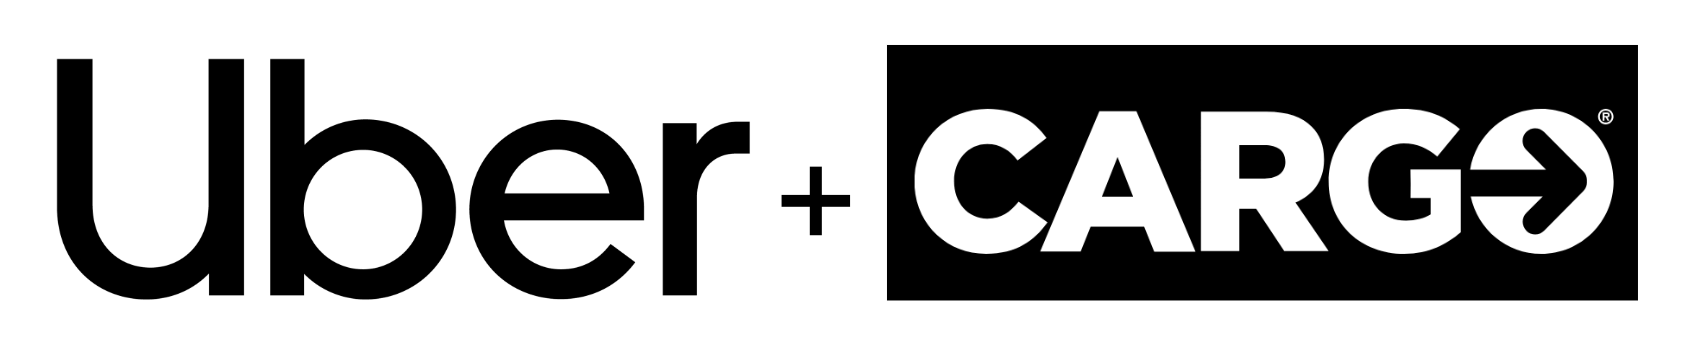 uber_cargo_logo